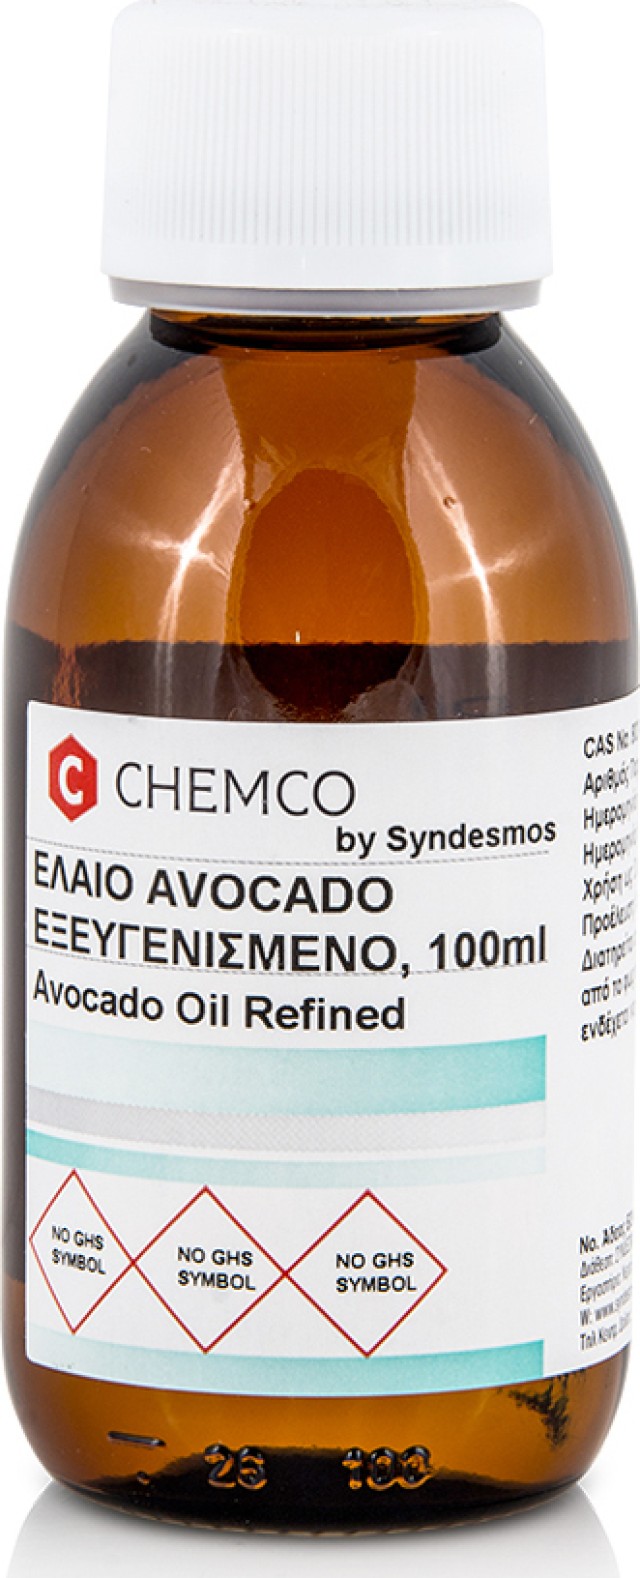 Chemco Avocado Oil Refined Έλαιο Αβοκάντο Εξευγενισμένο, 100ml